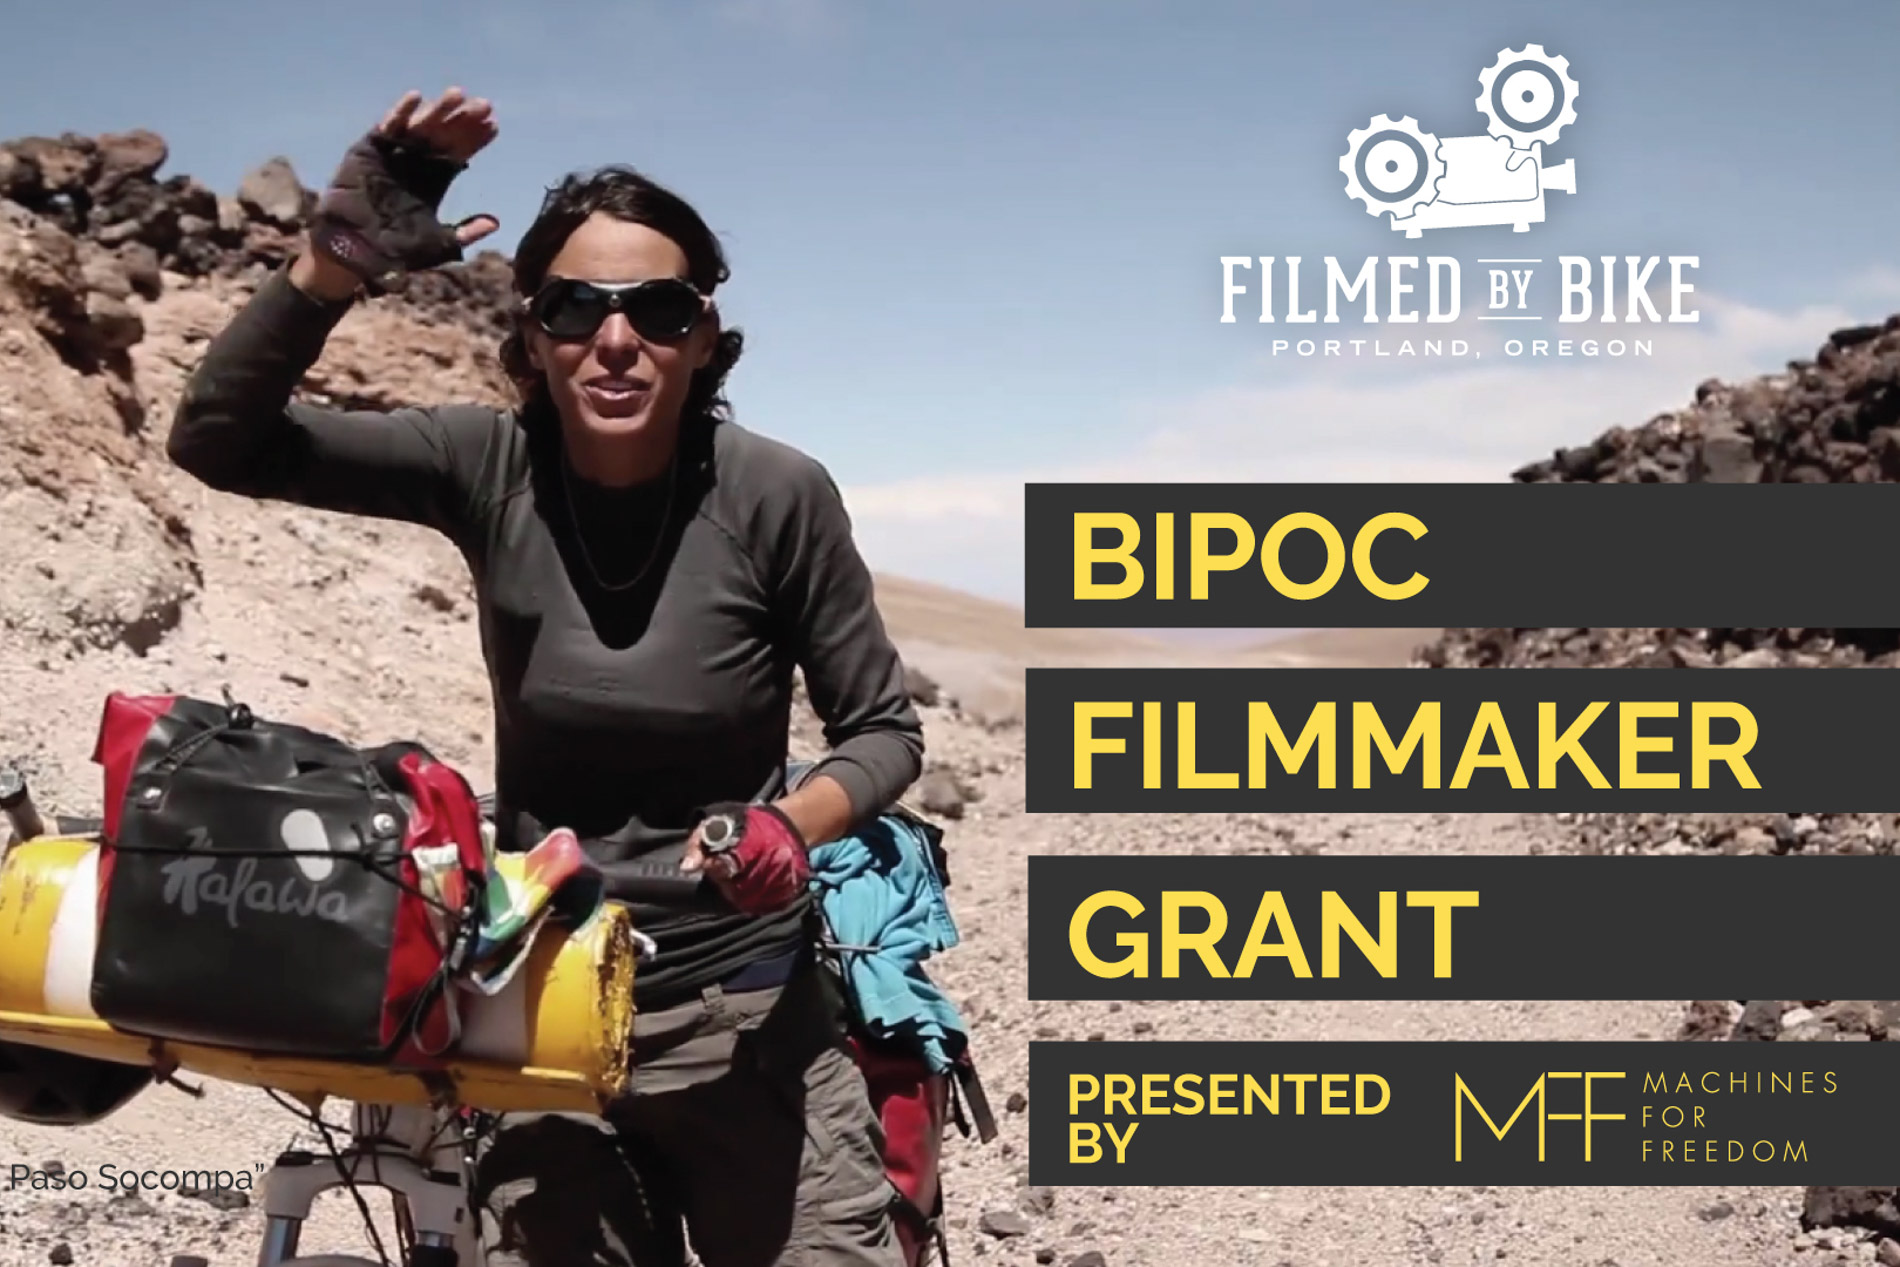 Filmed by Bike offers BIPOC Filmmaker Grants to emerging artists. Deadline is June 20.